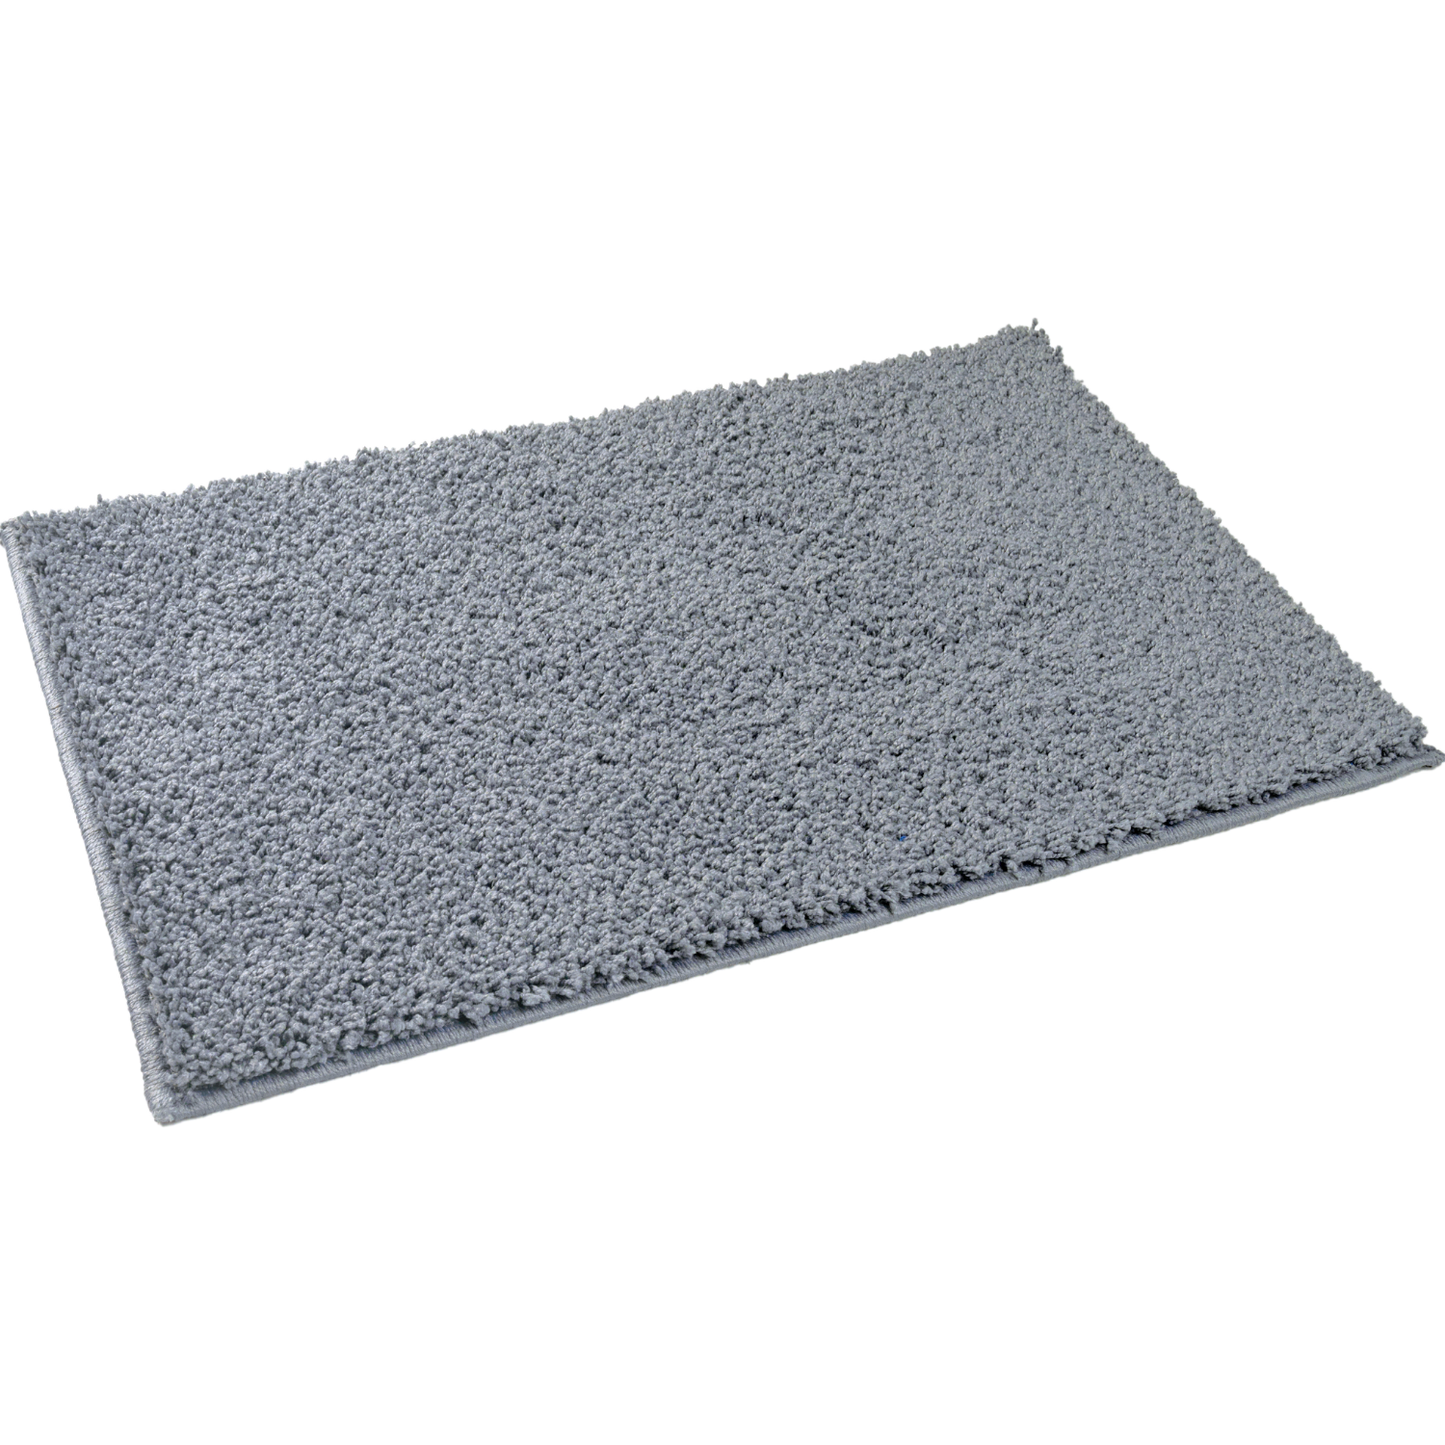 60x40cm Soft, Mold Resistant Bath Mat, Machine Washable, Suitable For  Bathroom Floor, Grey